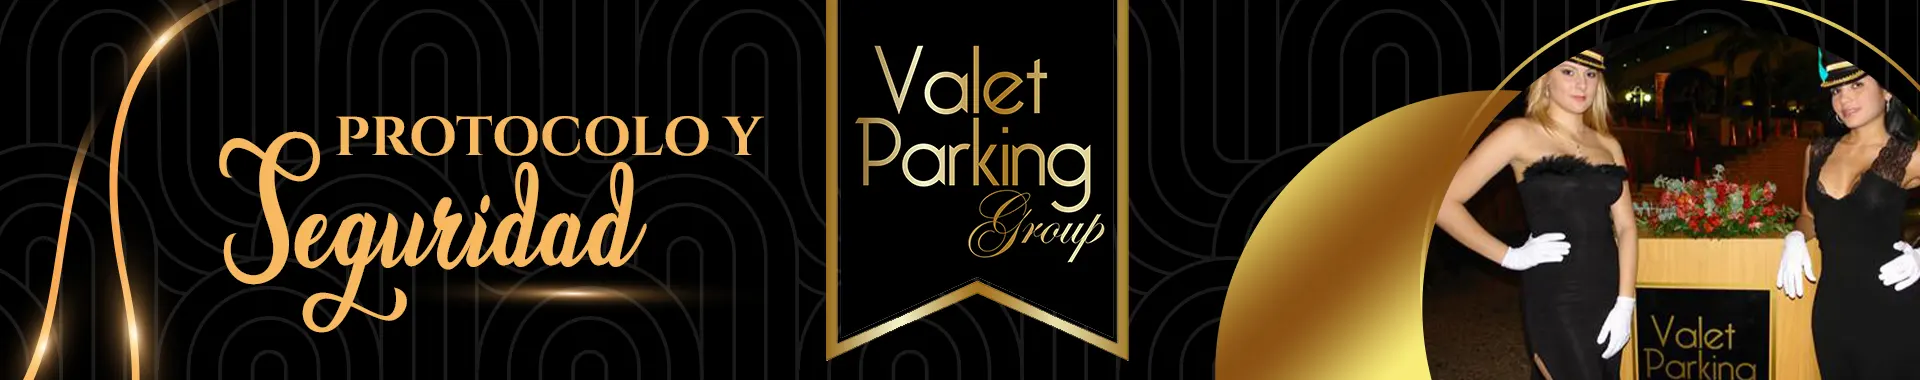 Imagen 2 del perfil de Valet Parking Group